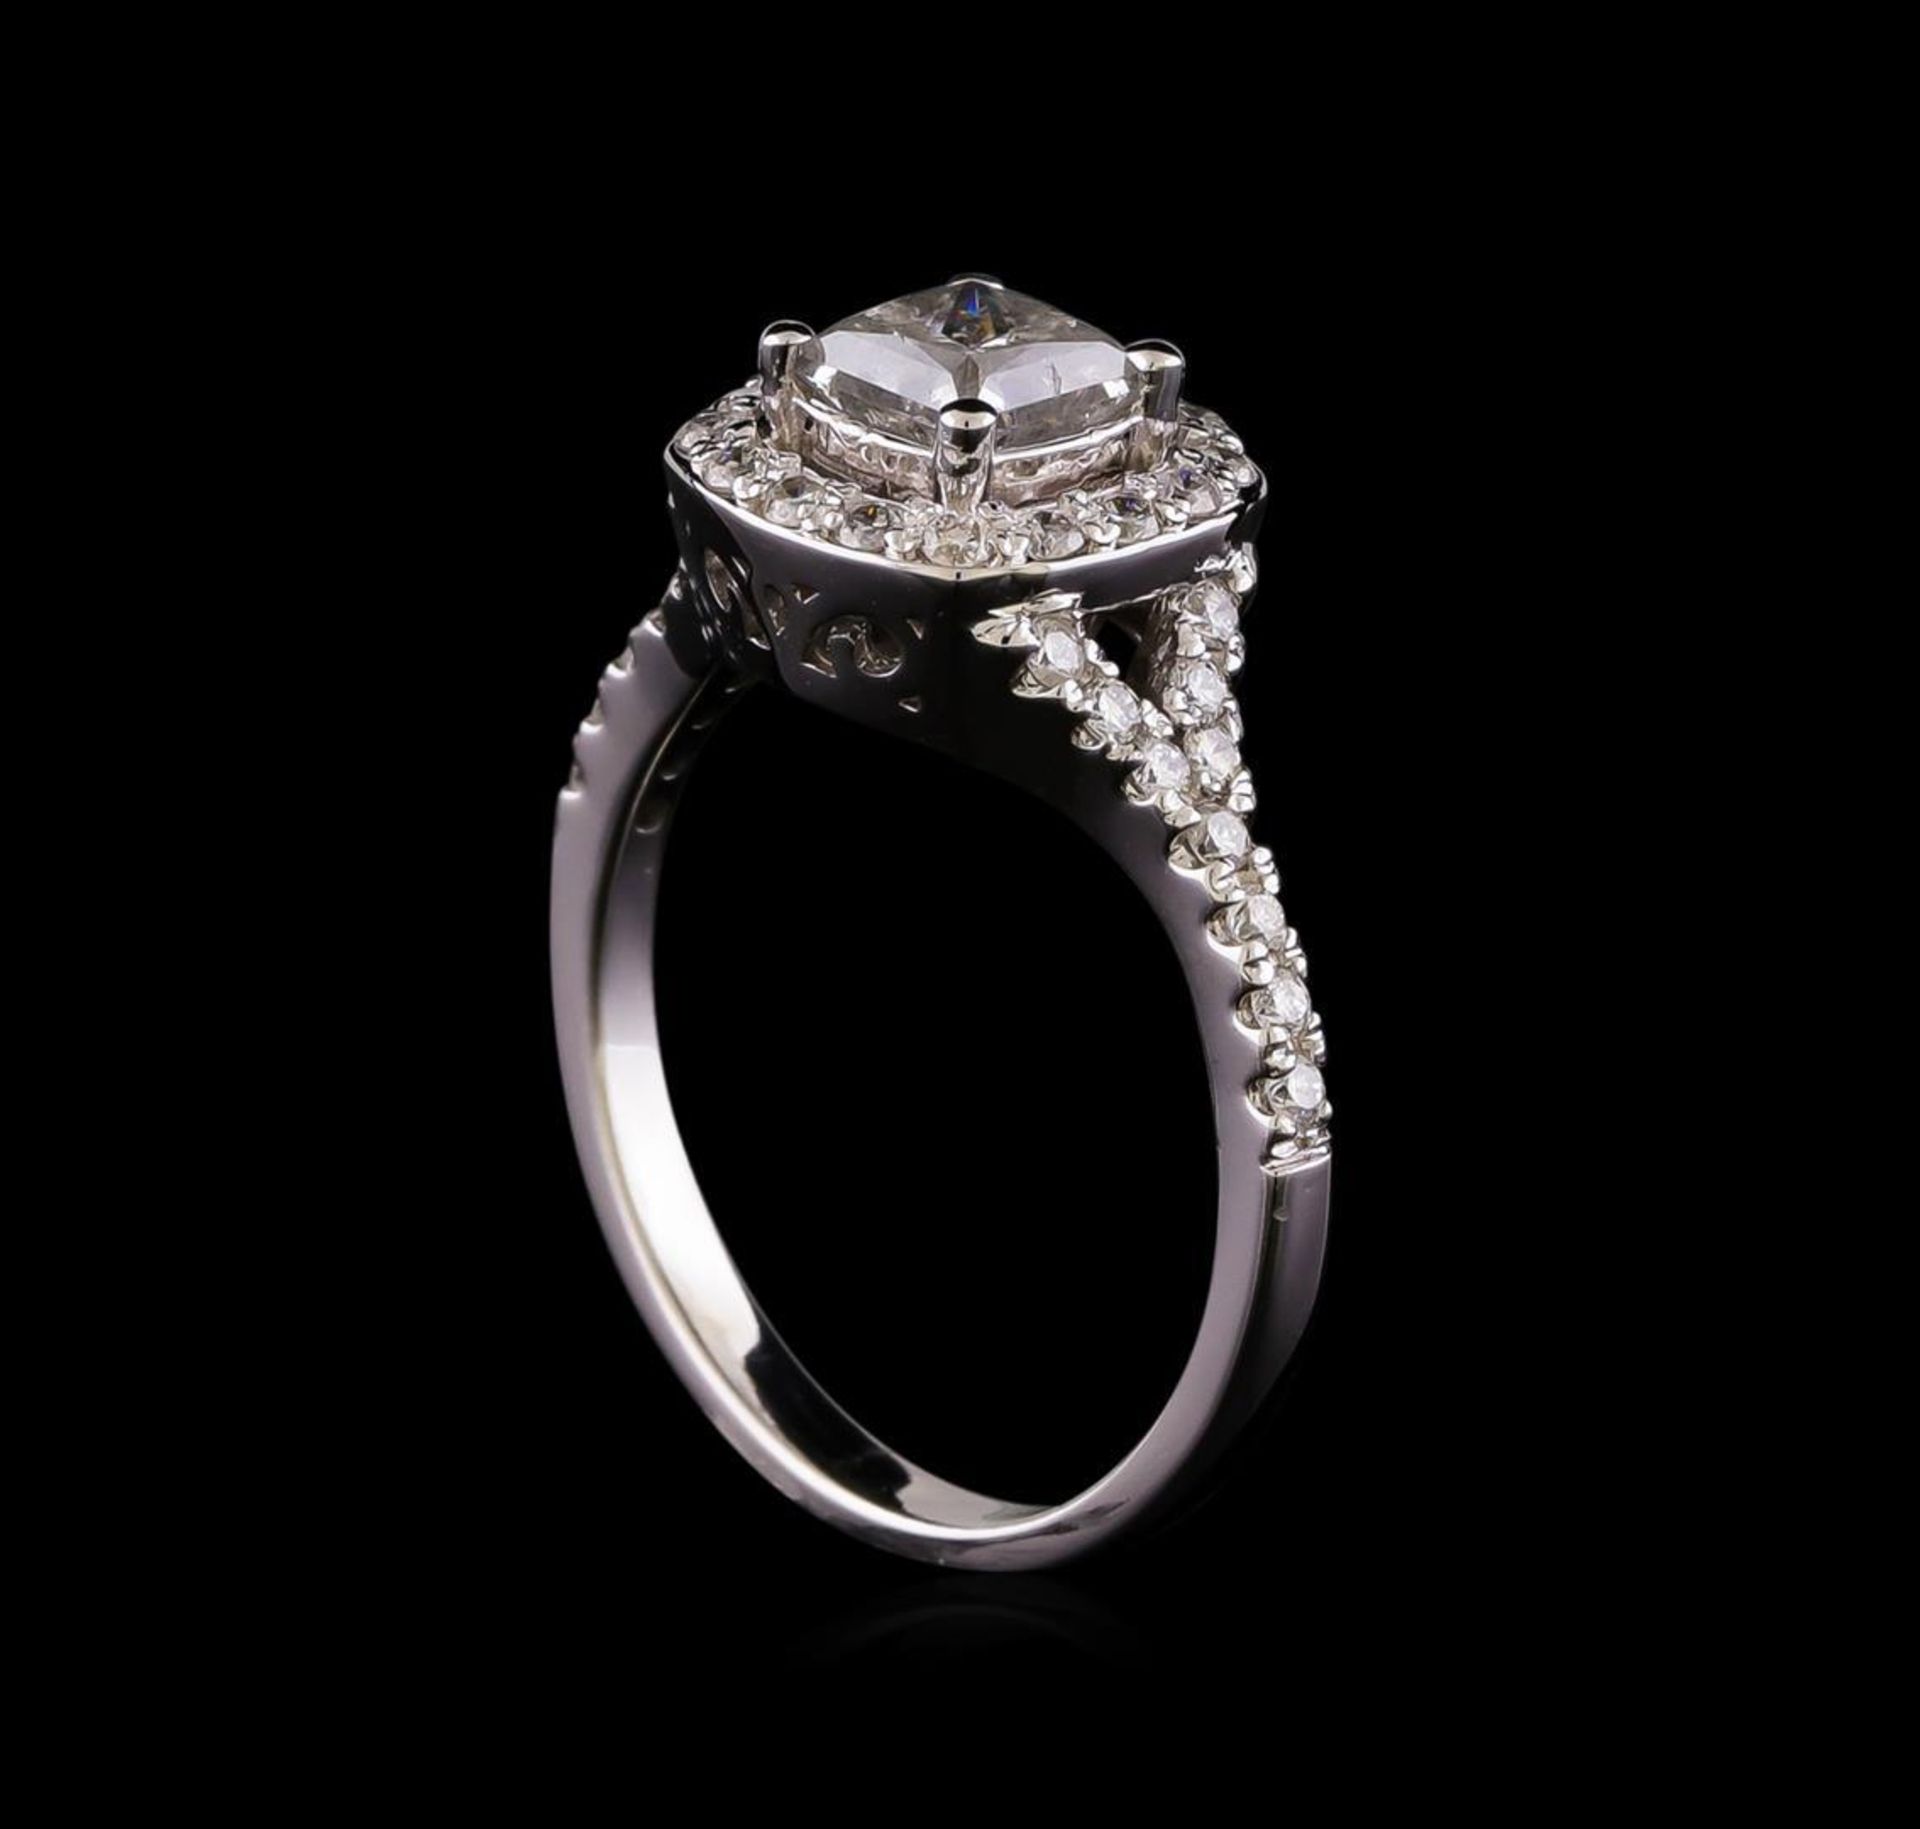 1.23 ctw Diamond Ring - 14KT White Gold - Image 4 of 5